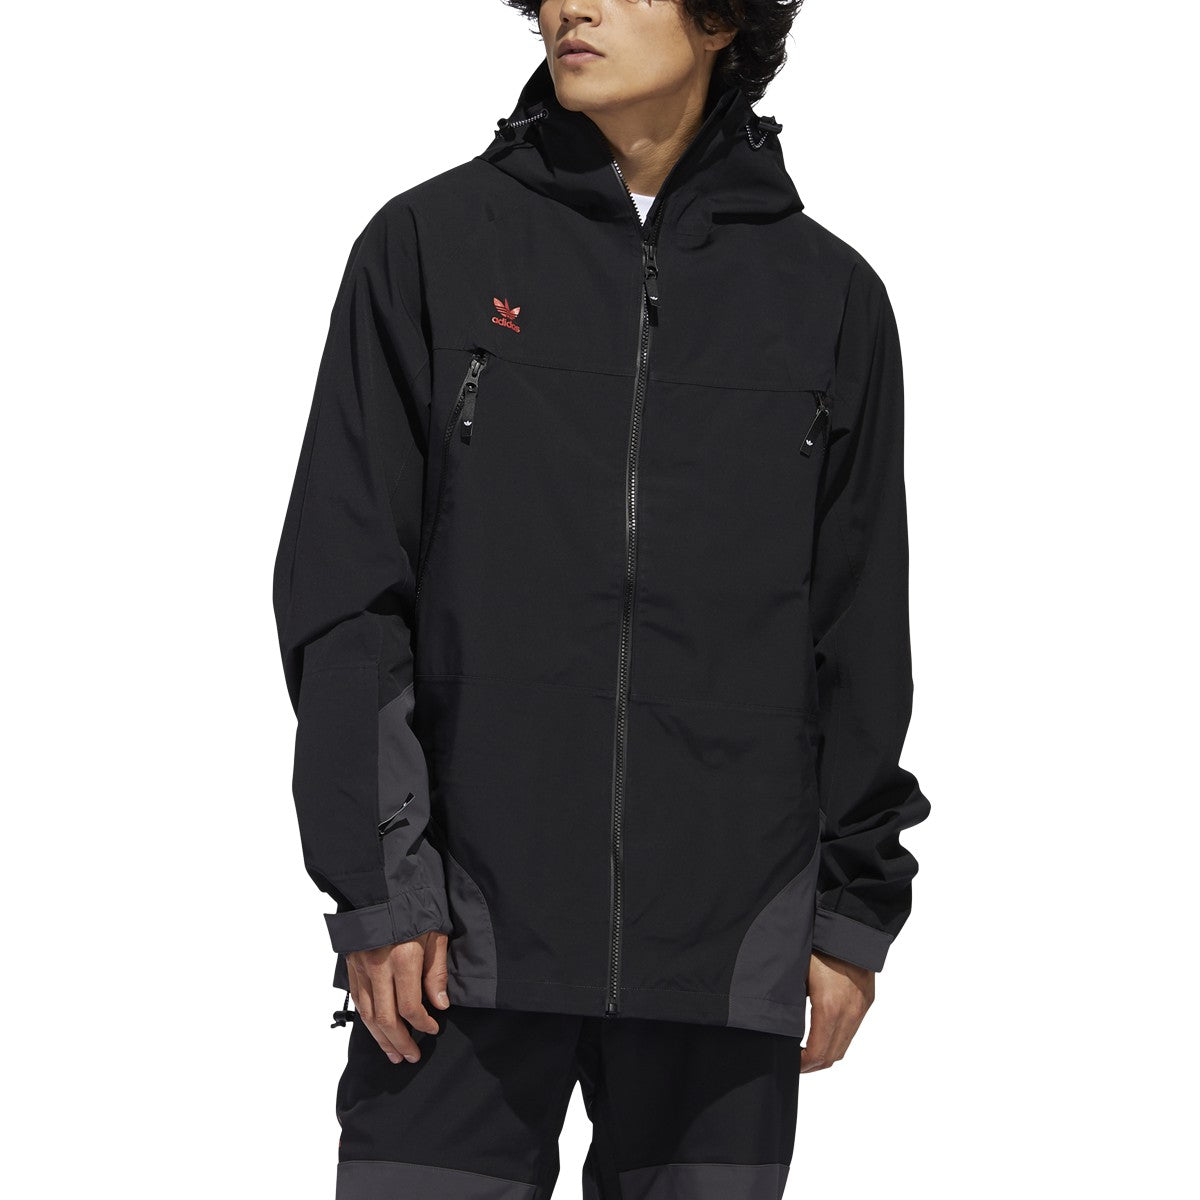 Black 3-Layer 20K Adidas Snowboarding Jacket